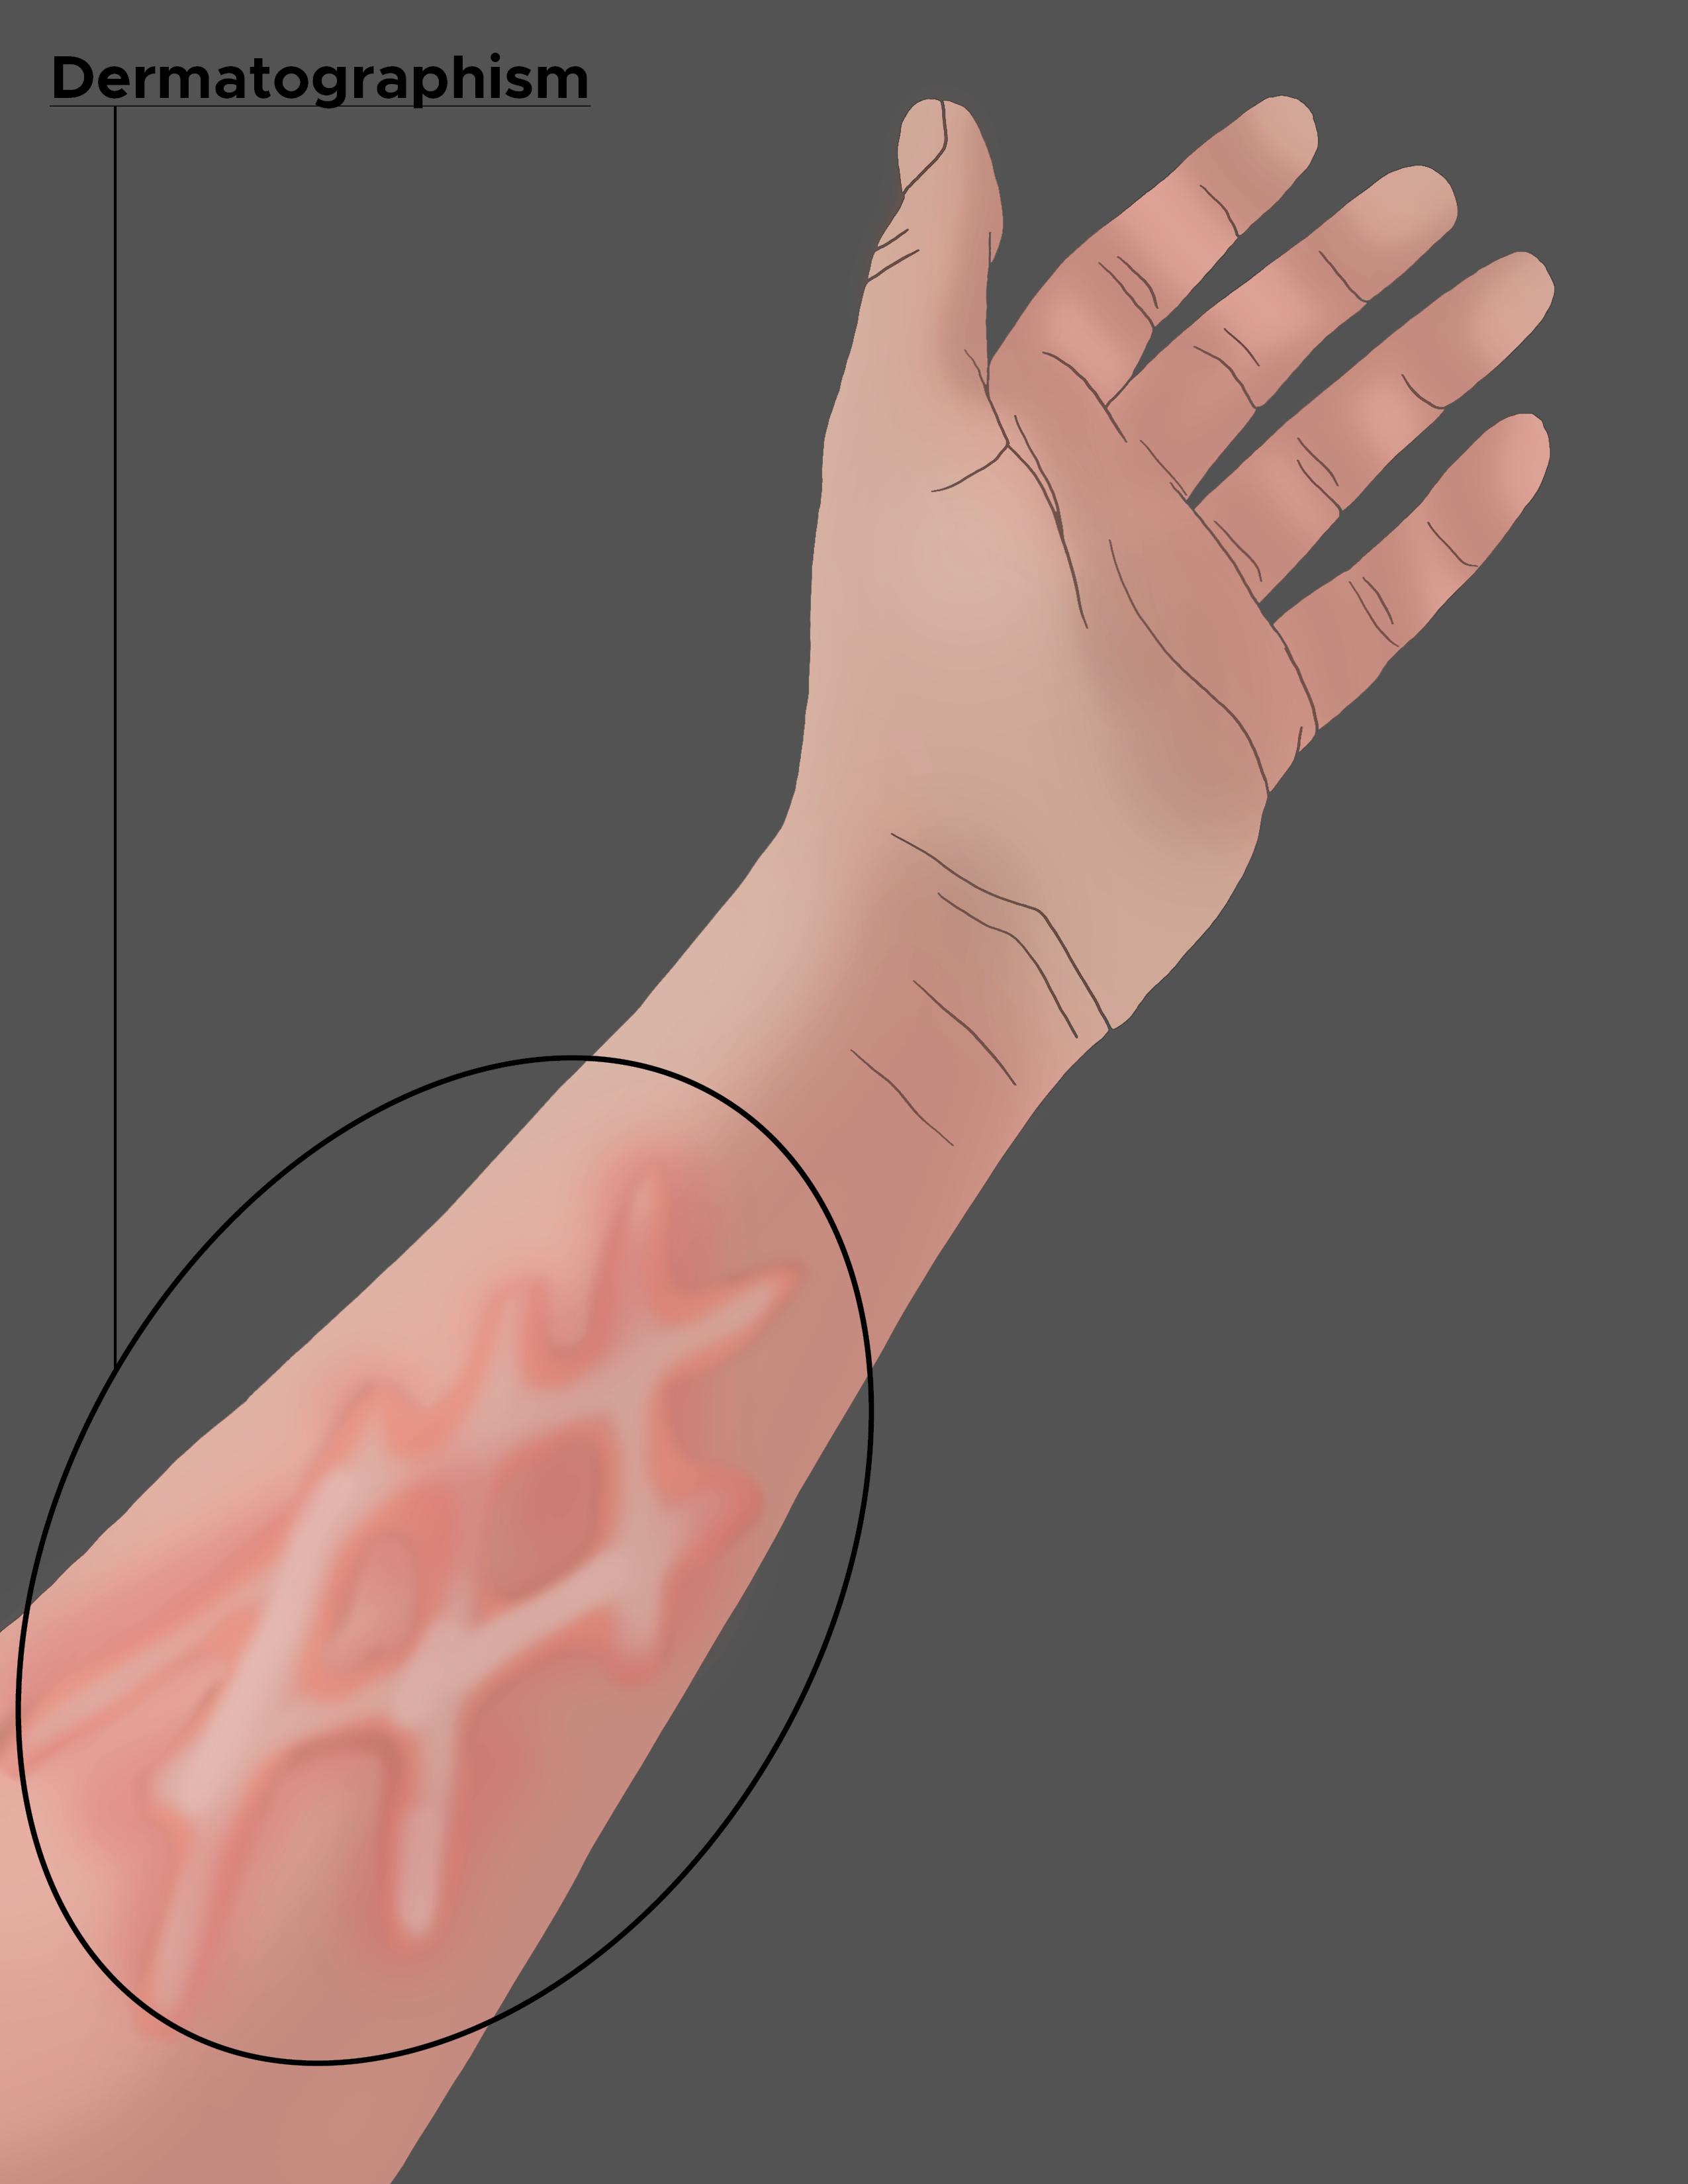 Illustration of forearm displaying dermatographism on skin.